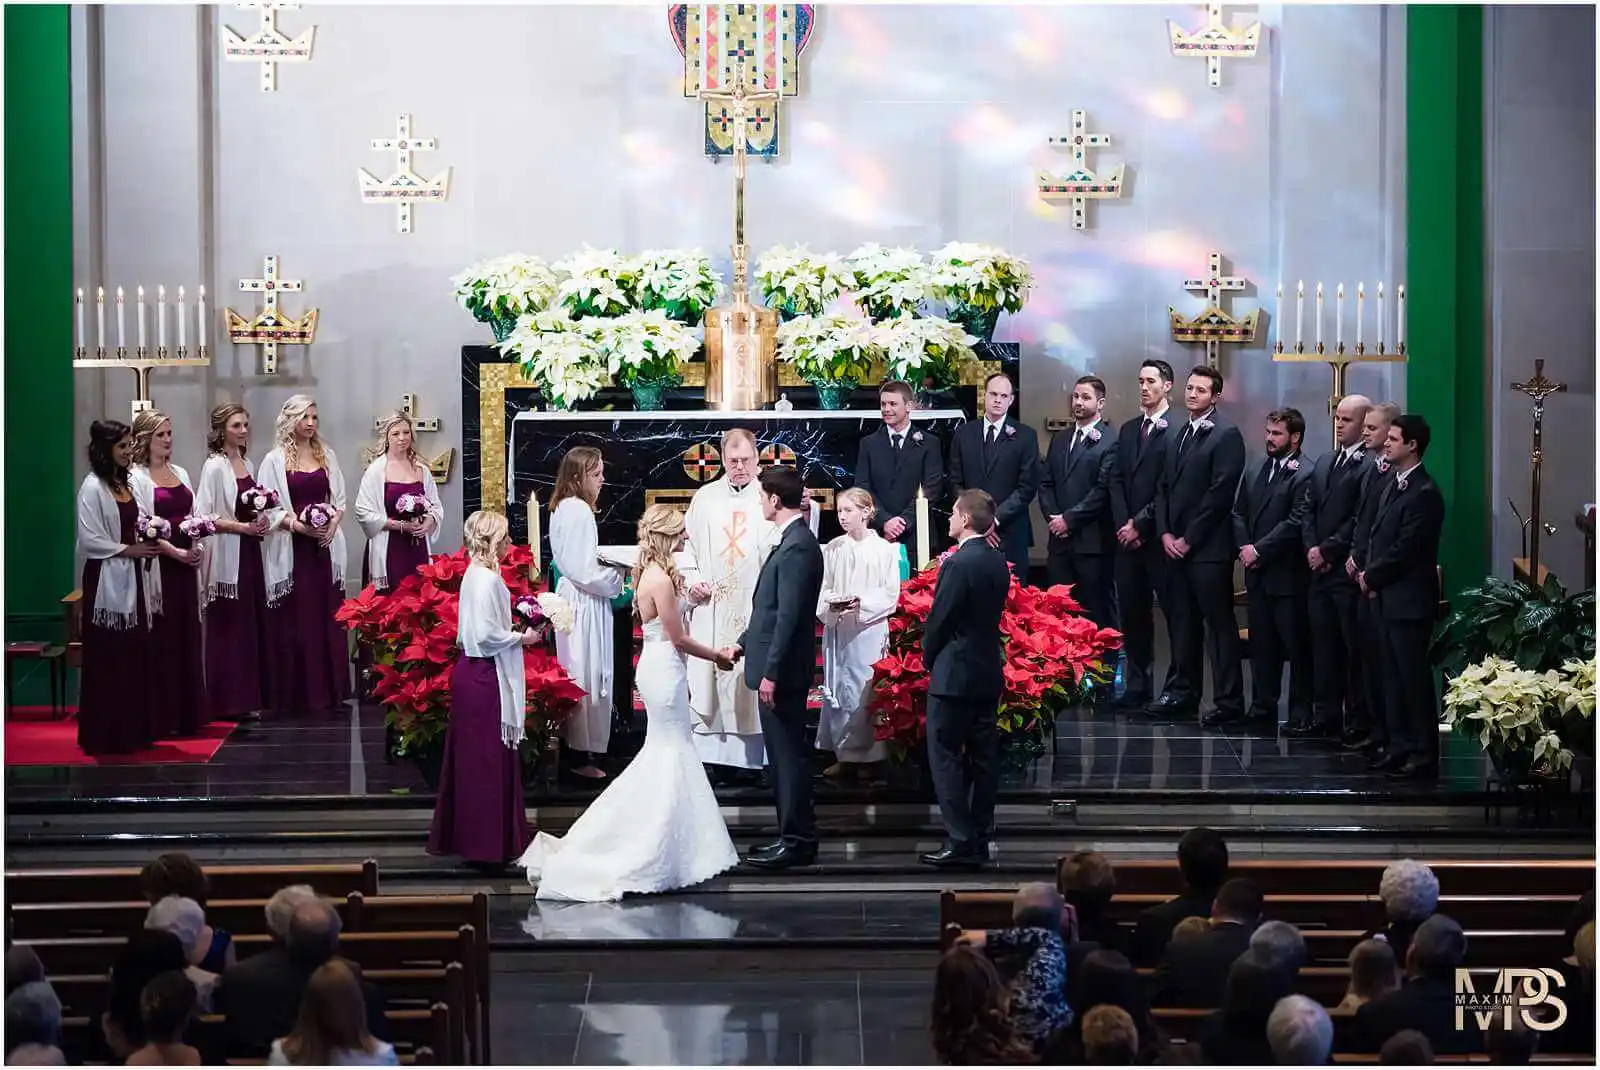 Elegant Cincinnati church wedding ceremony with bride and groom.